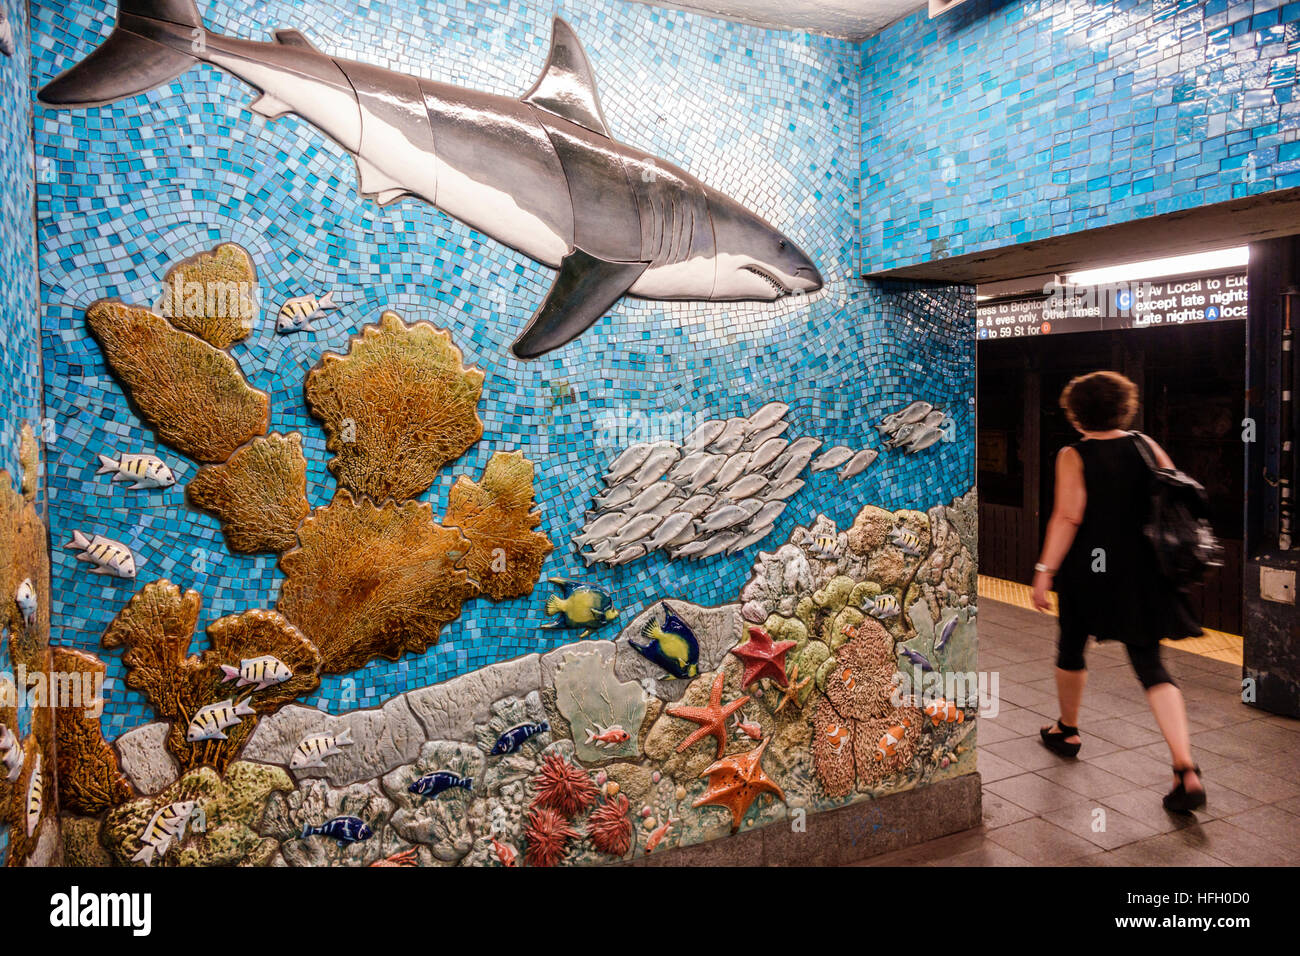 New York City,NY NYC Manhattan,subway,MTA,81st Street,Museum of Natural History Center,station,platform,mosaic,mural,shark,marine life,NY160722035 Stock Photo